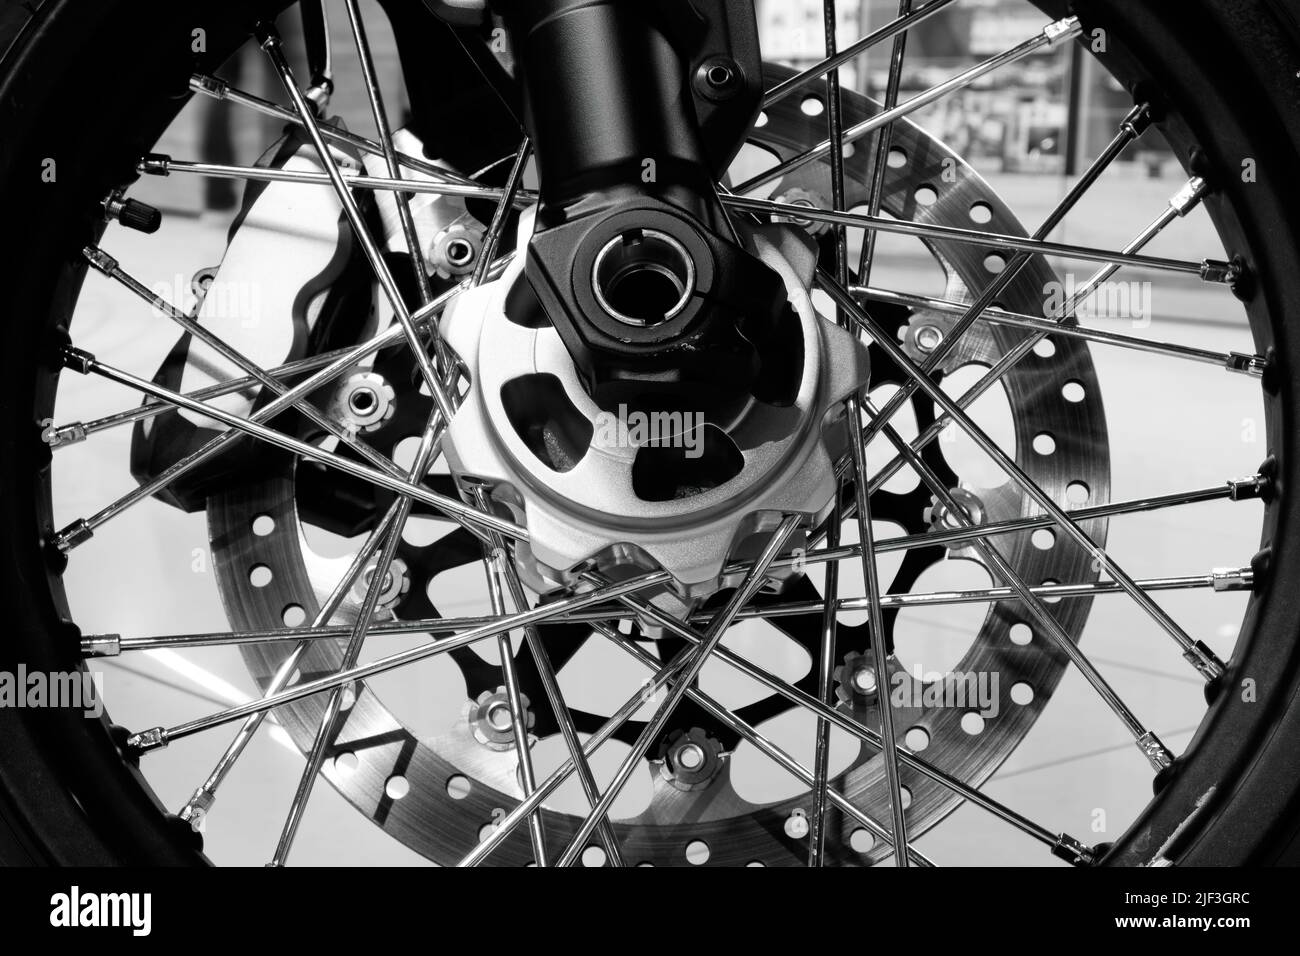 Bike. Wheel close-up. Spokes, rim, brake pads and disc. Monochrome image Stock Photo